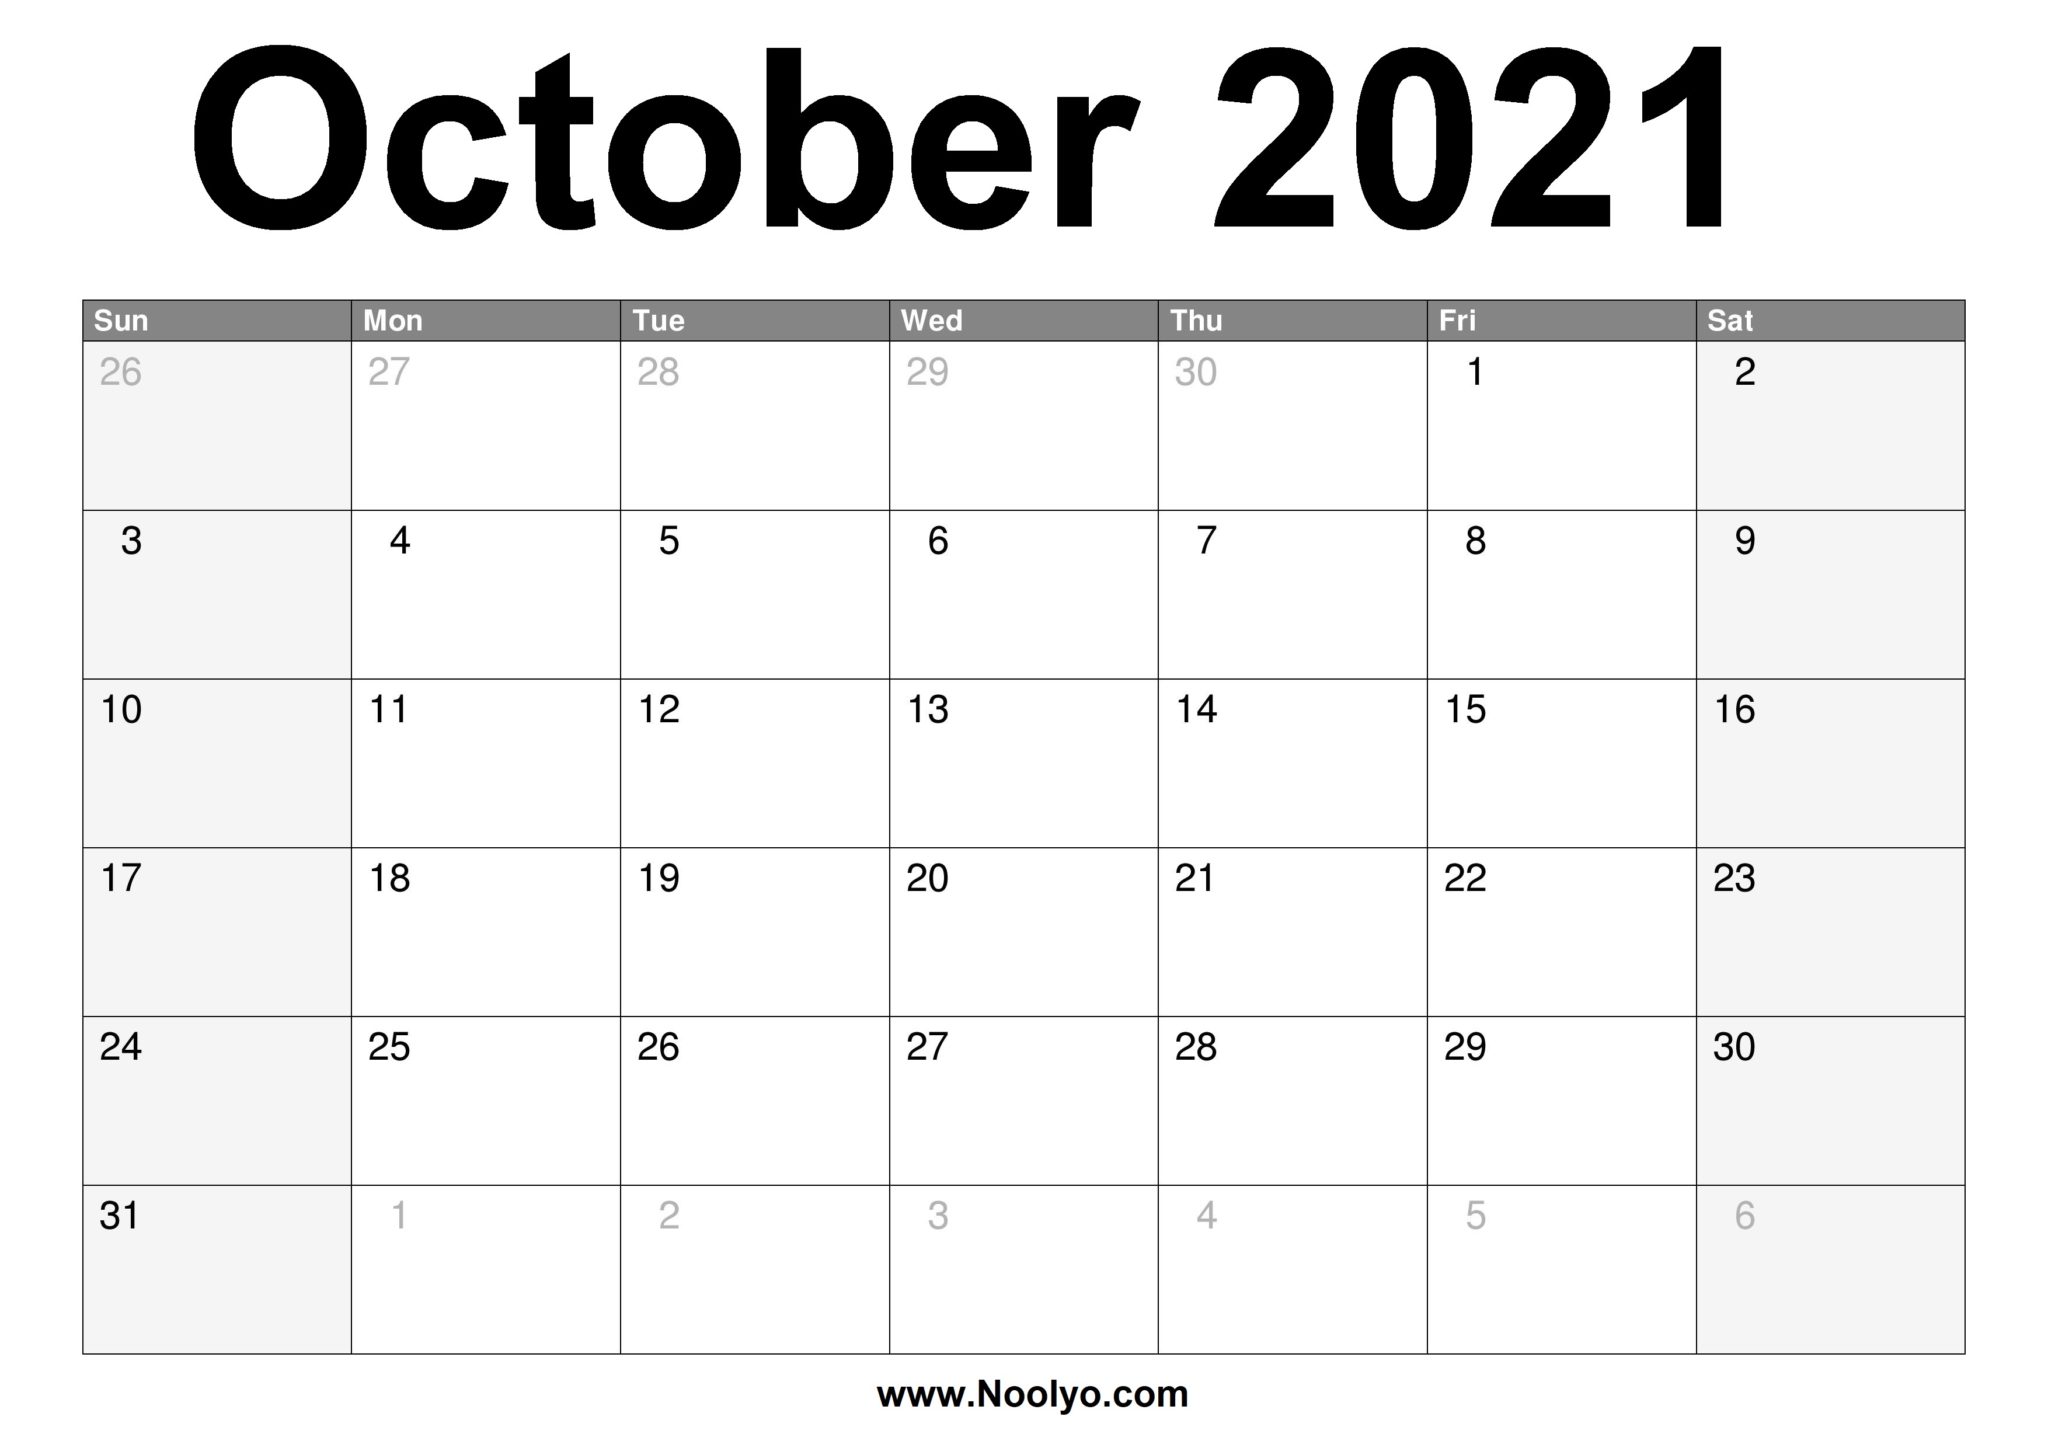 october-2021-calendar-printable-free-download-noolyo